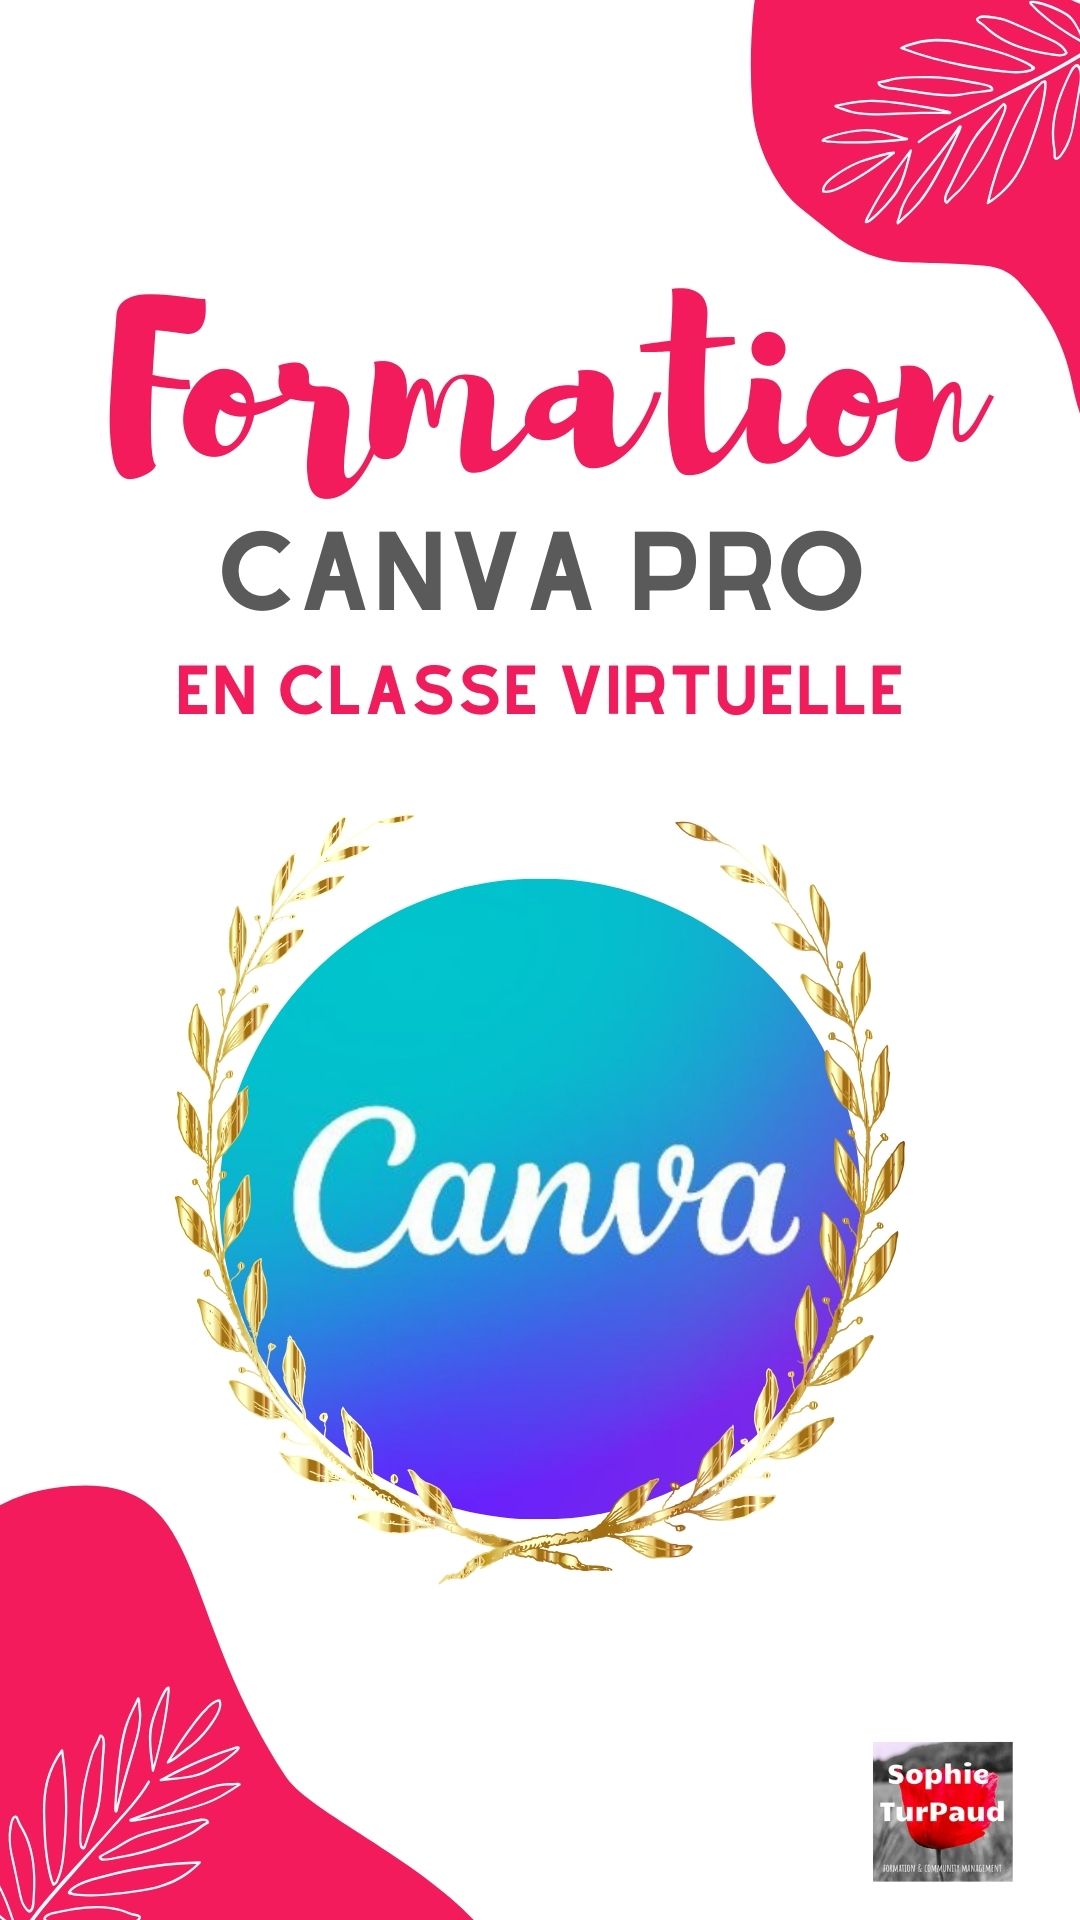 Formation Canva pro en classe virtuelle